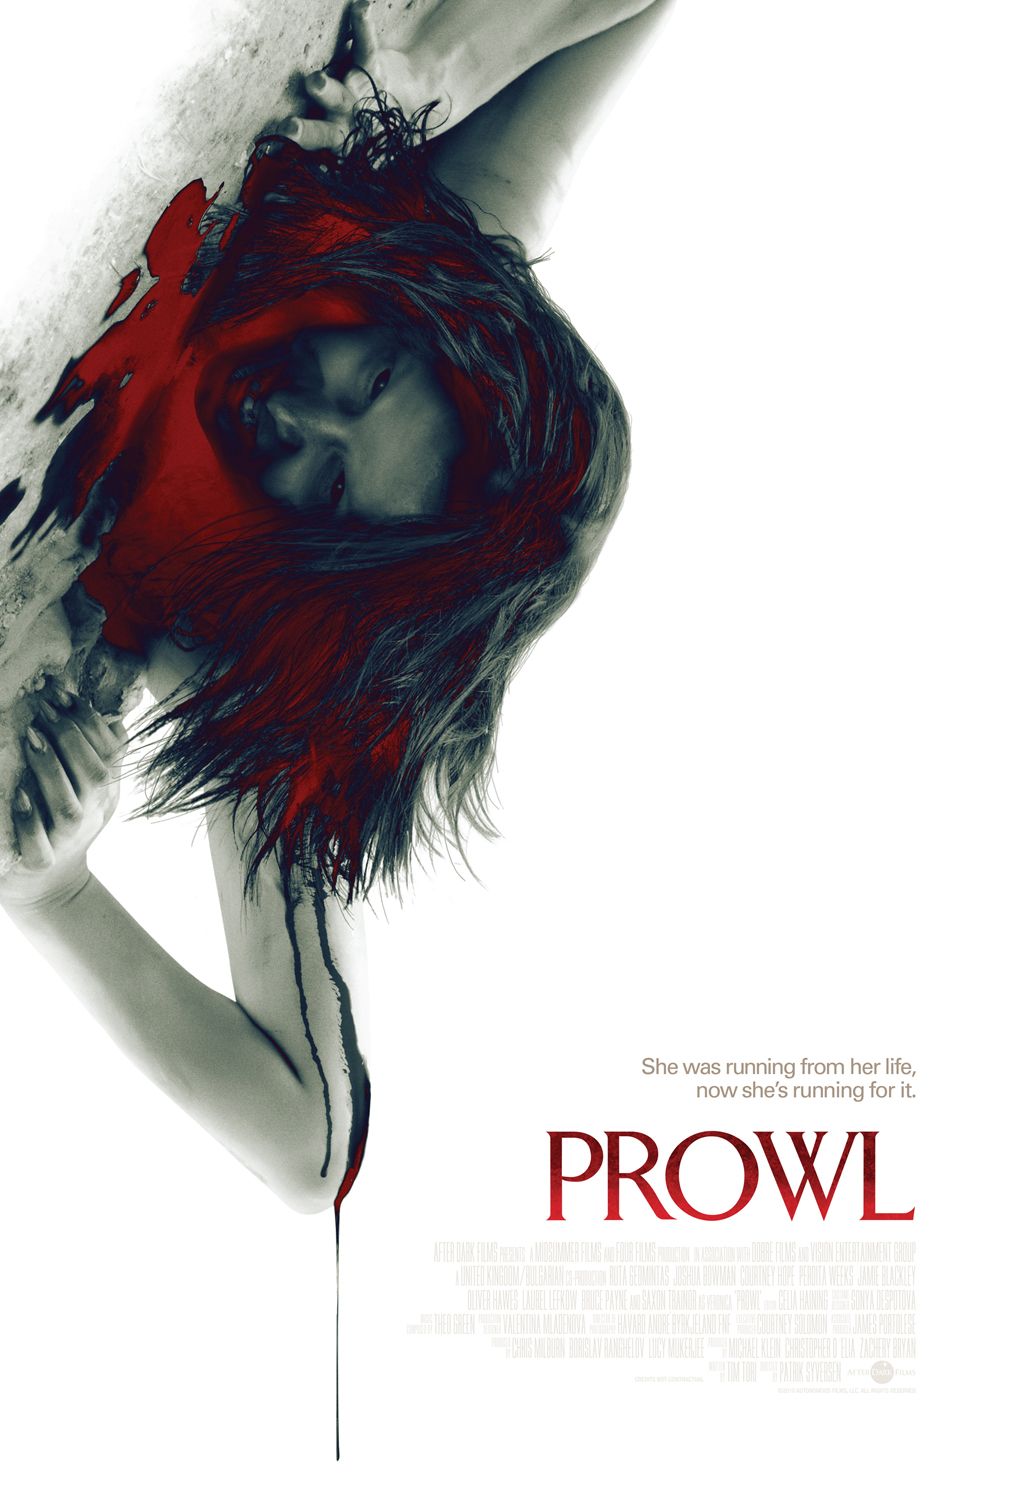 Prowl movies